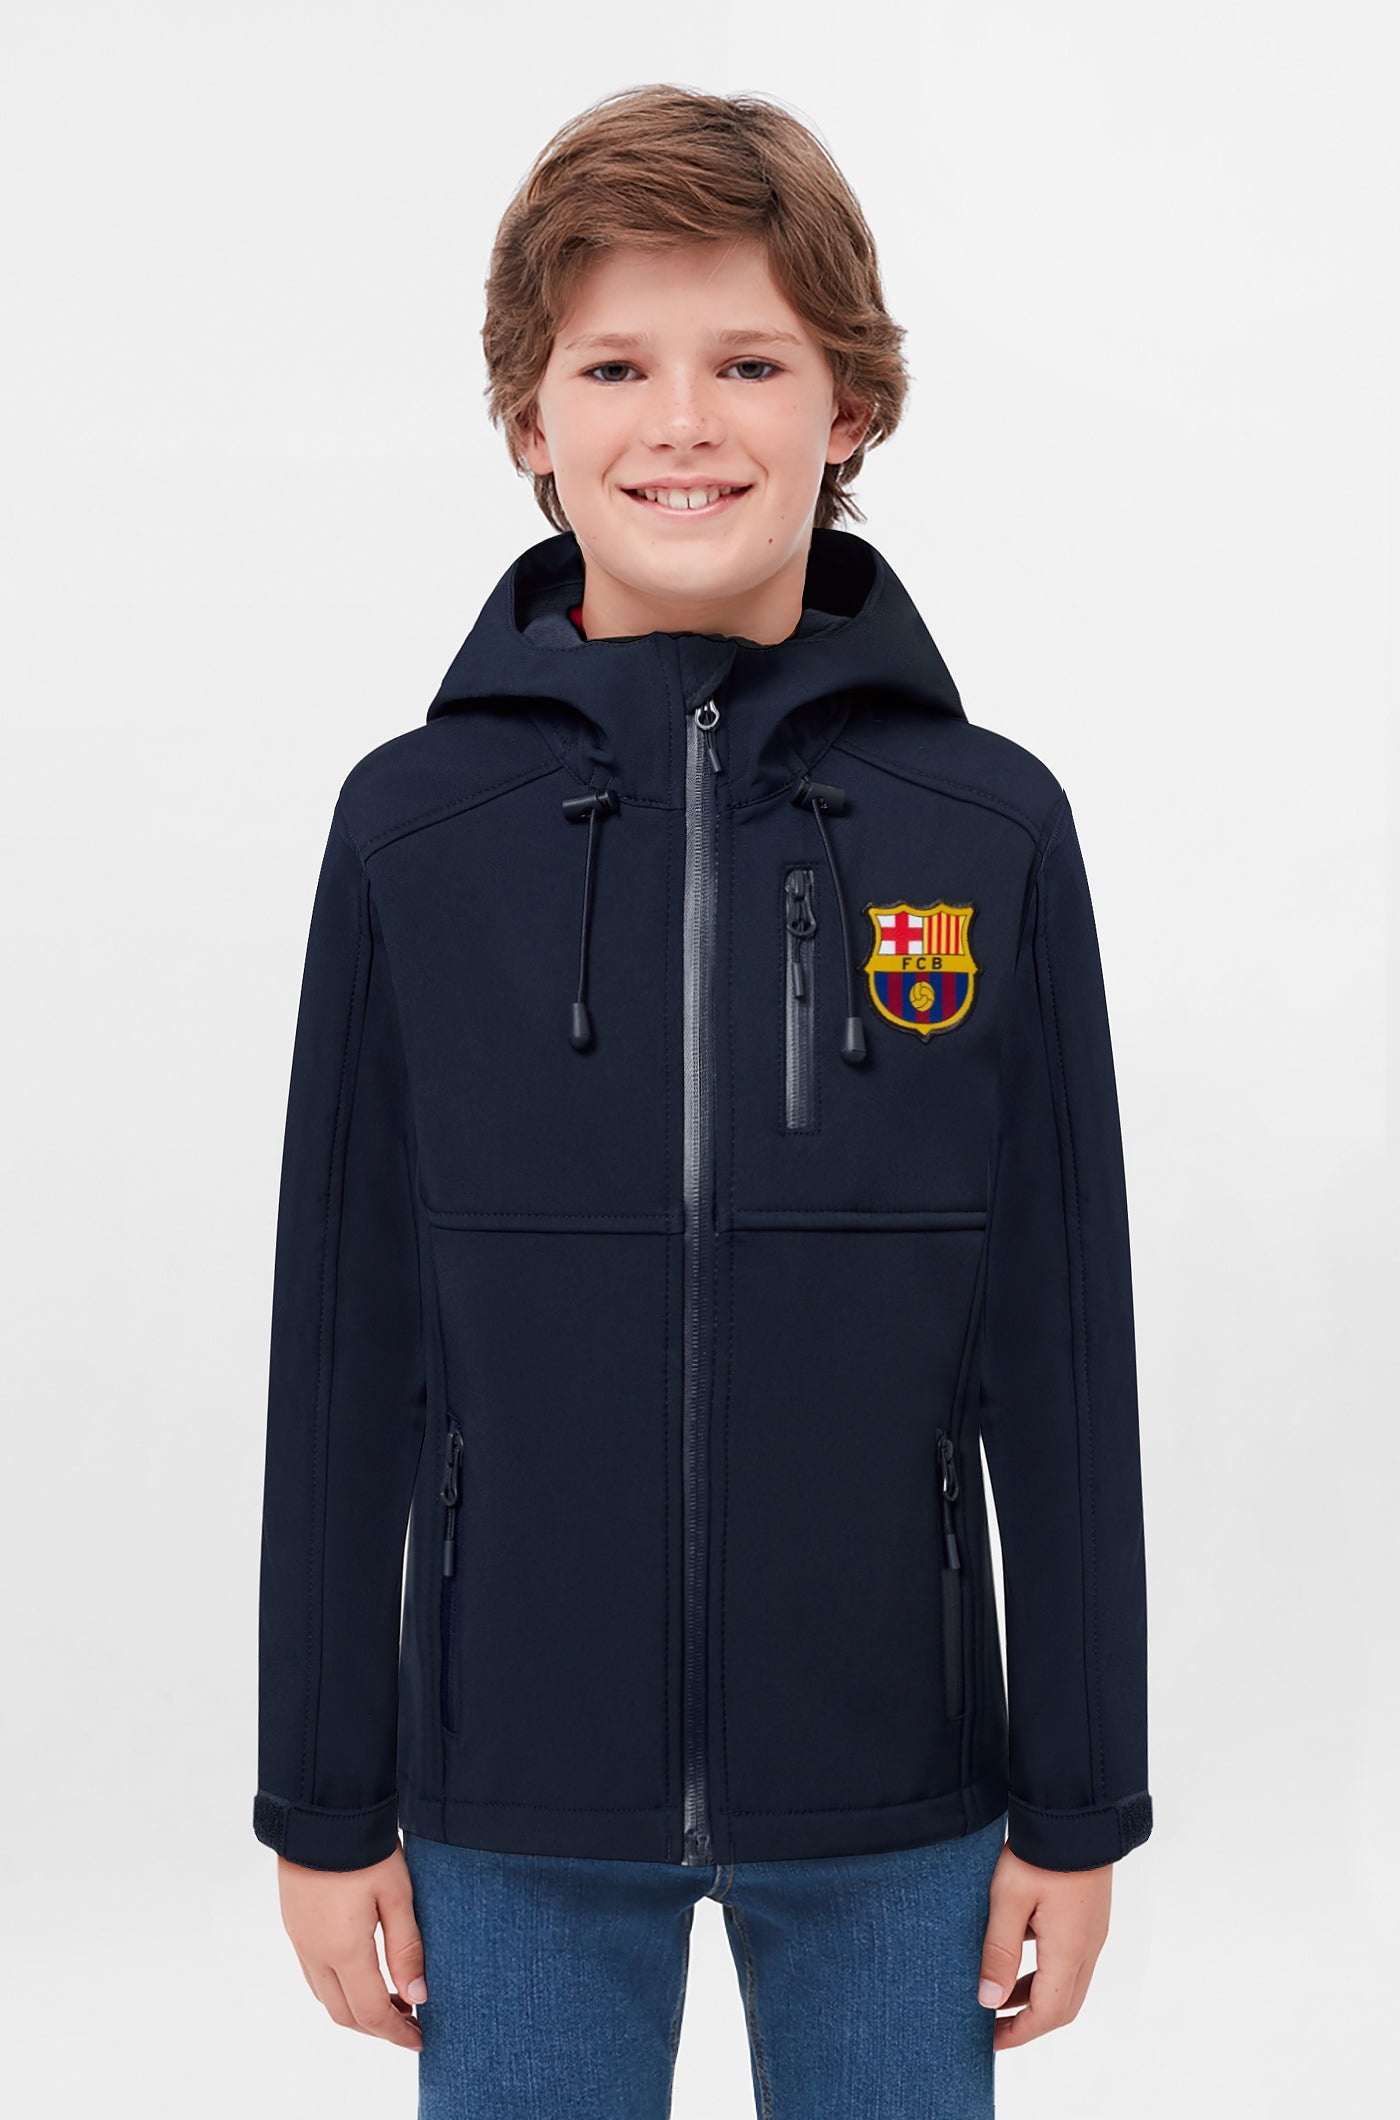 Moda para niños y niñas – Barça Official Store Spotify Camp Nou